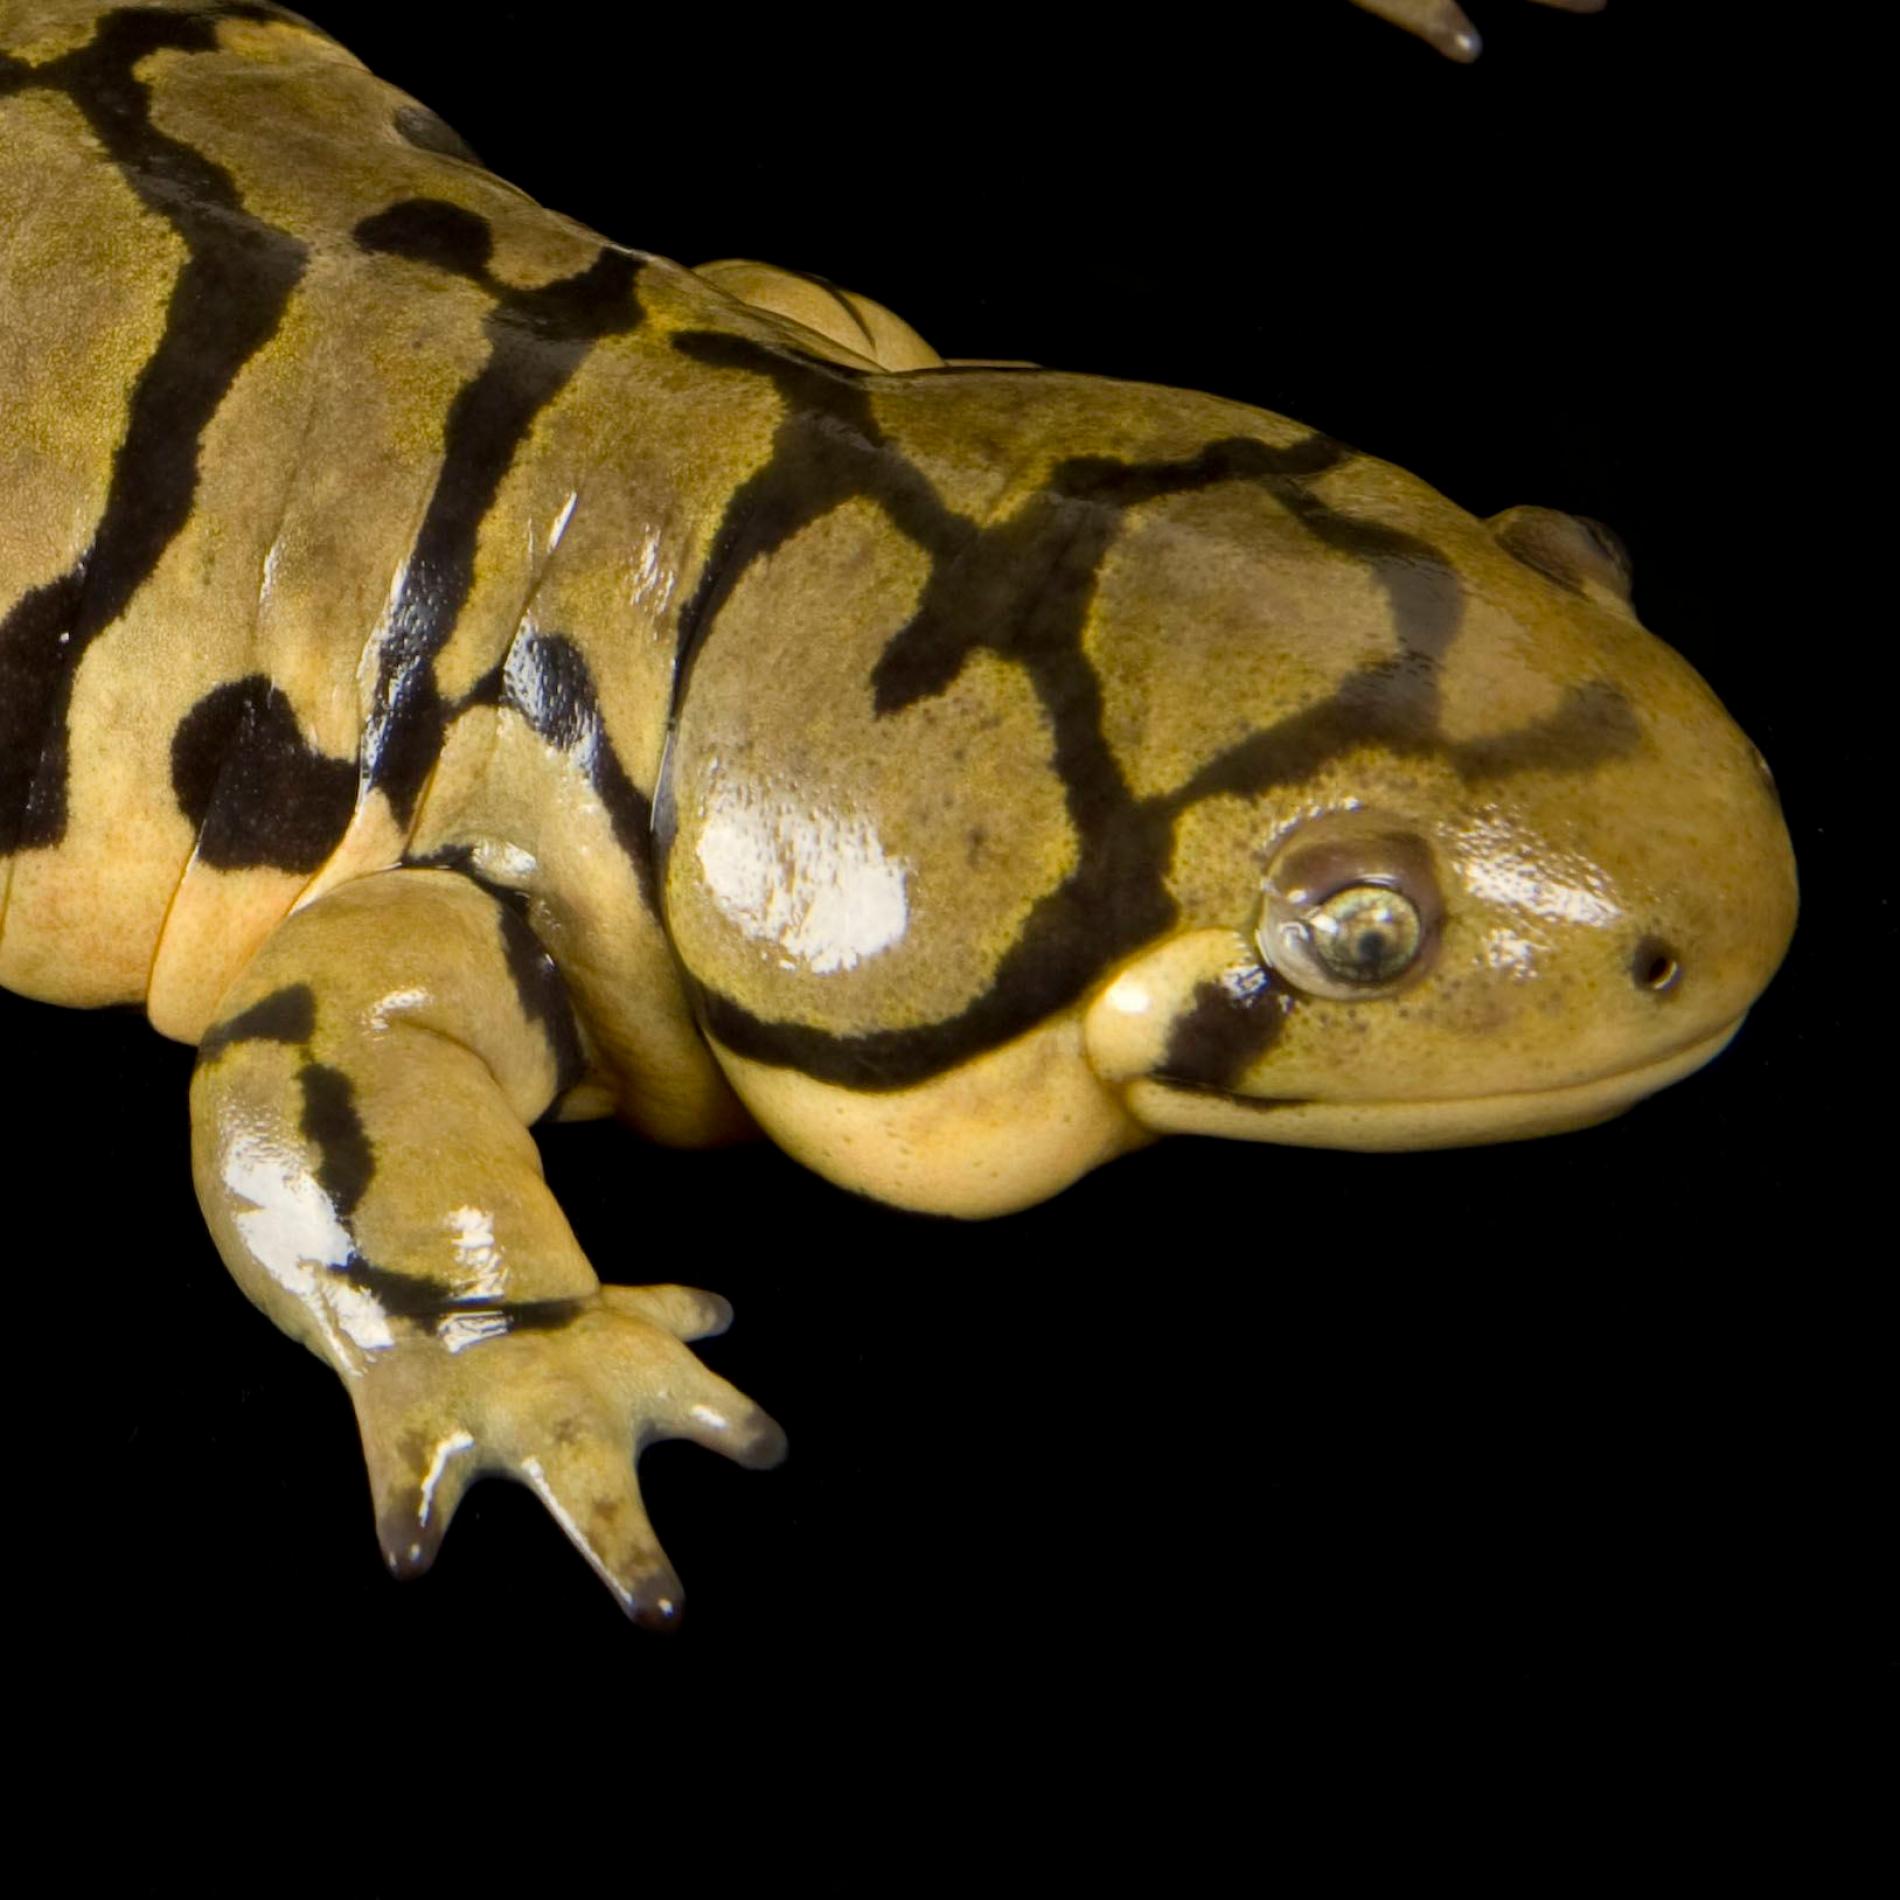 Tiger salamander photo